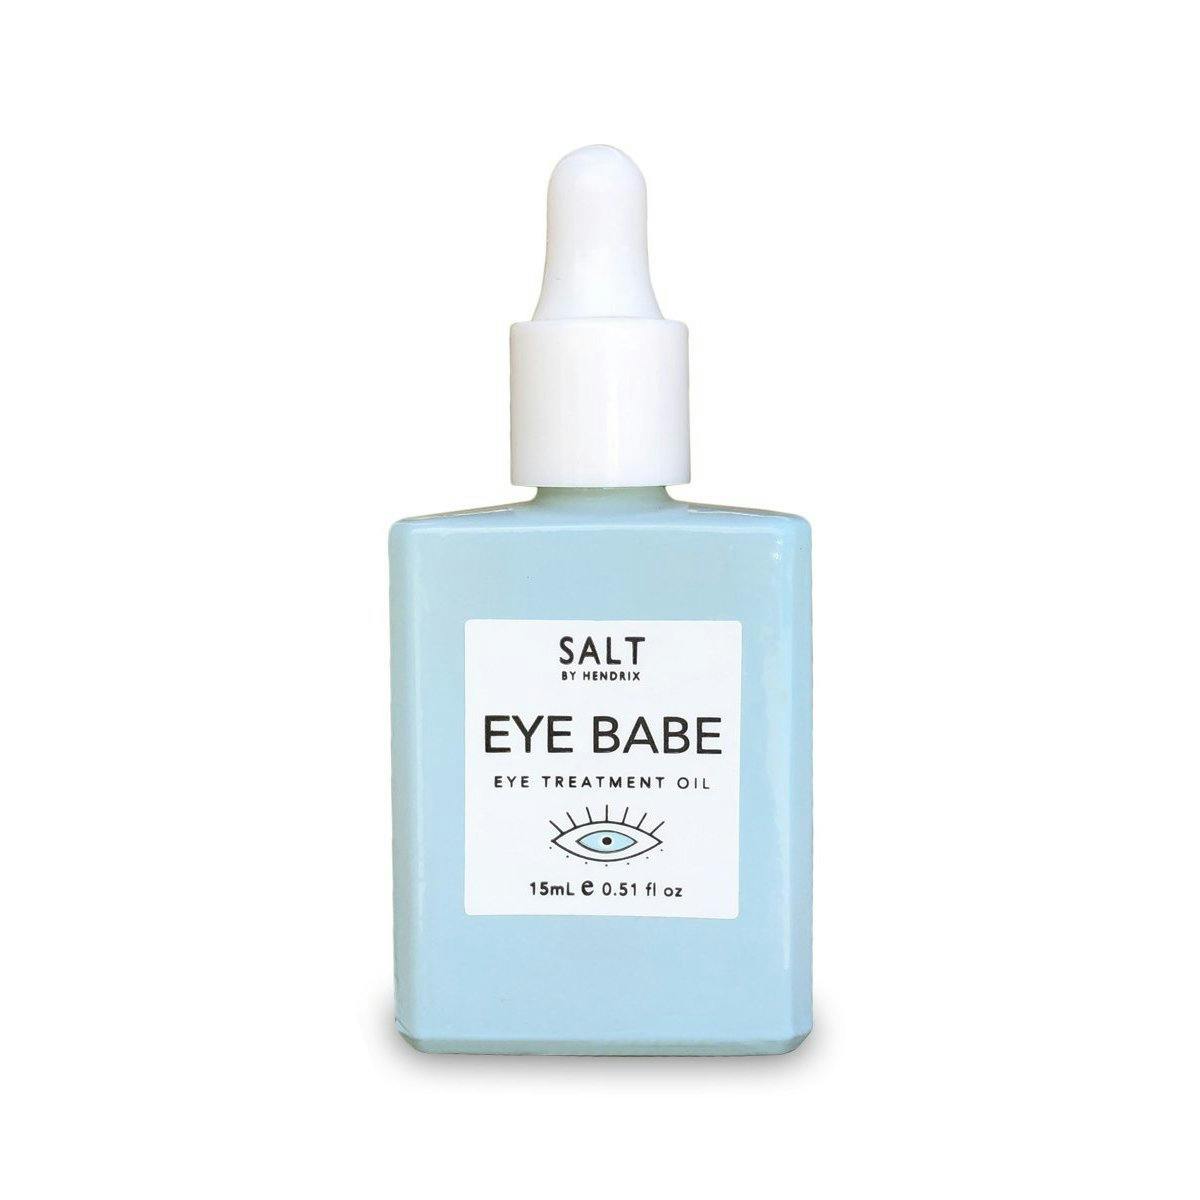 Salt by Hendrix Eye Babe Eye Treatment Oil 15ml